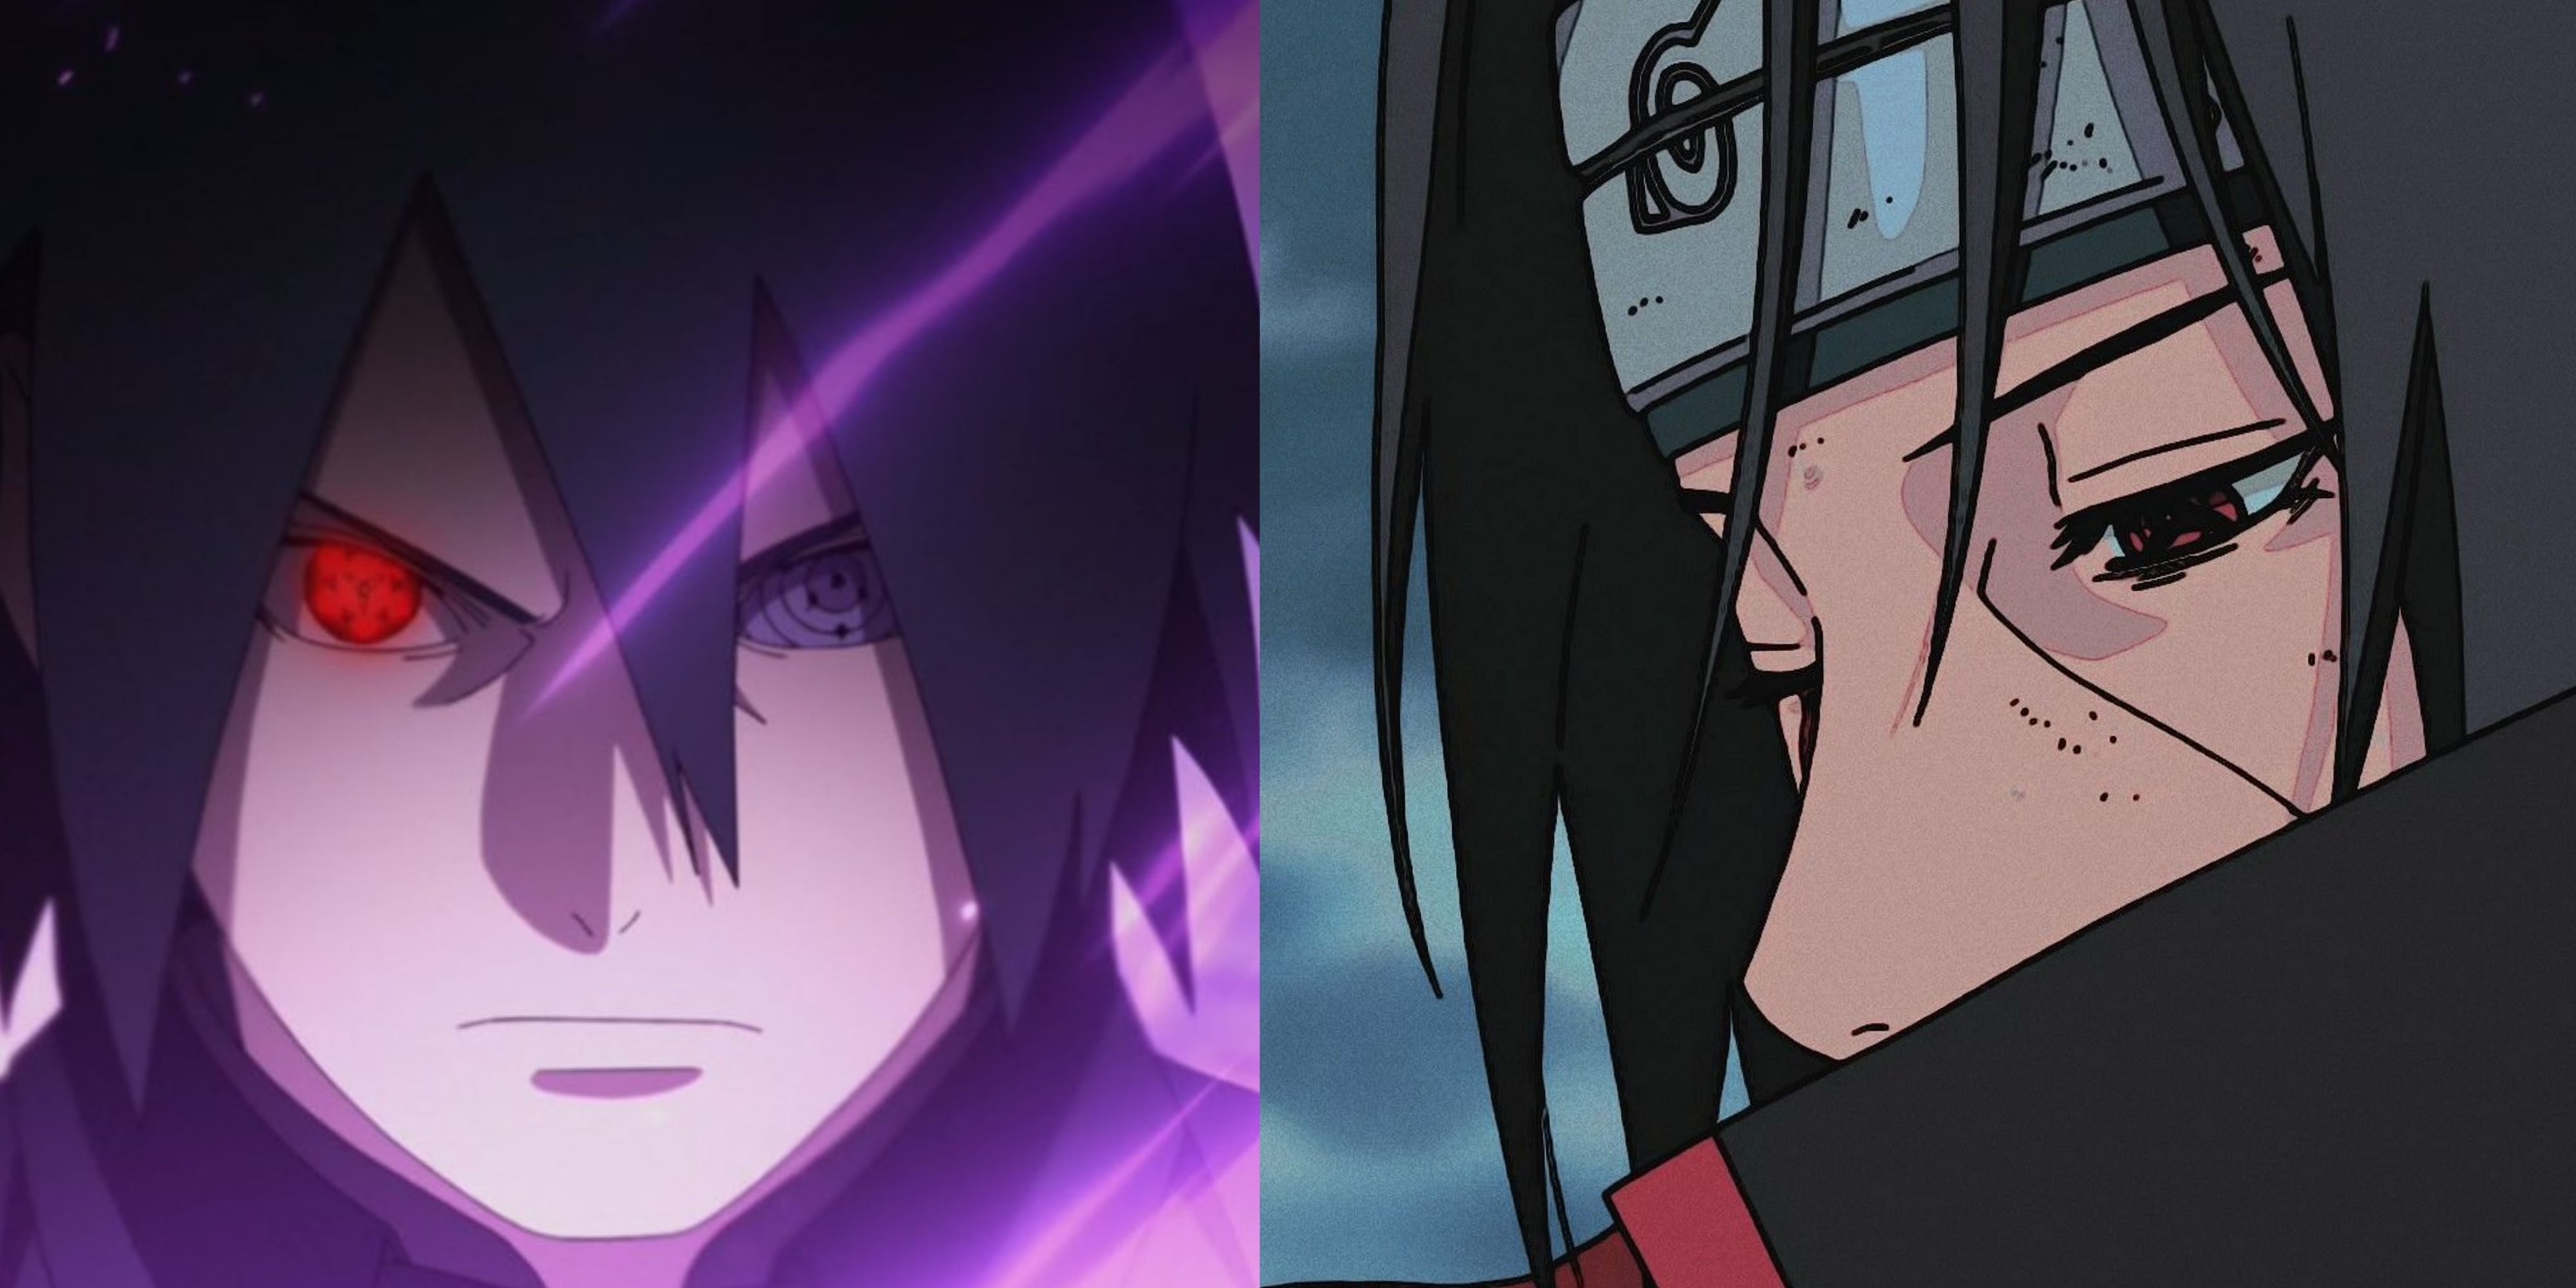 Naruto: Itachi or Sasuke? Which Brother Had More Potential?